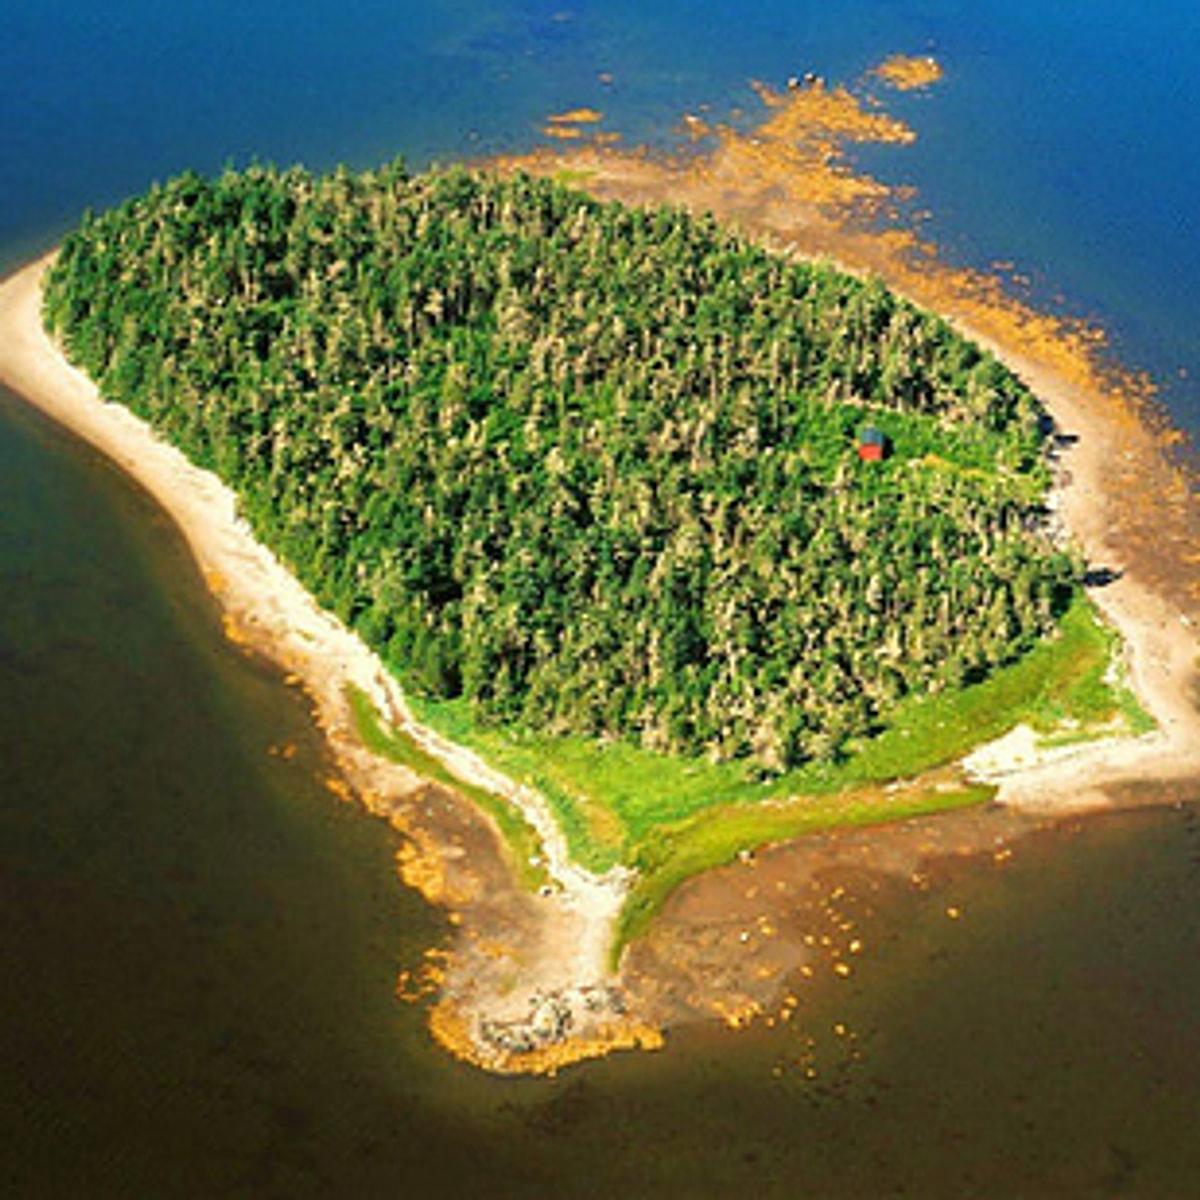 David island